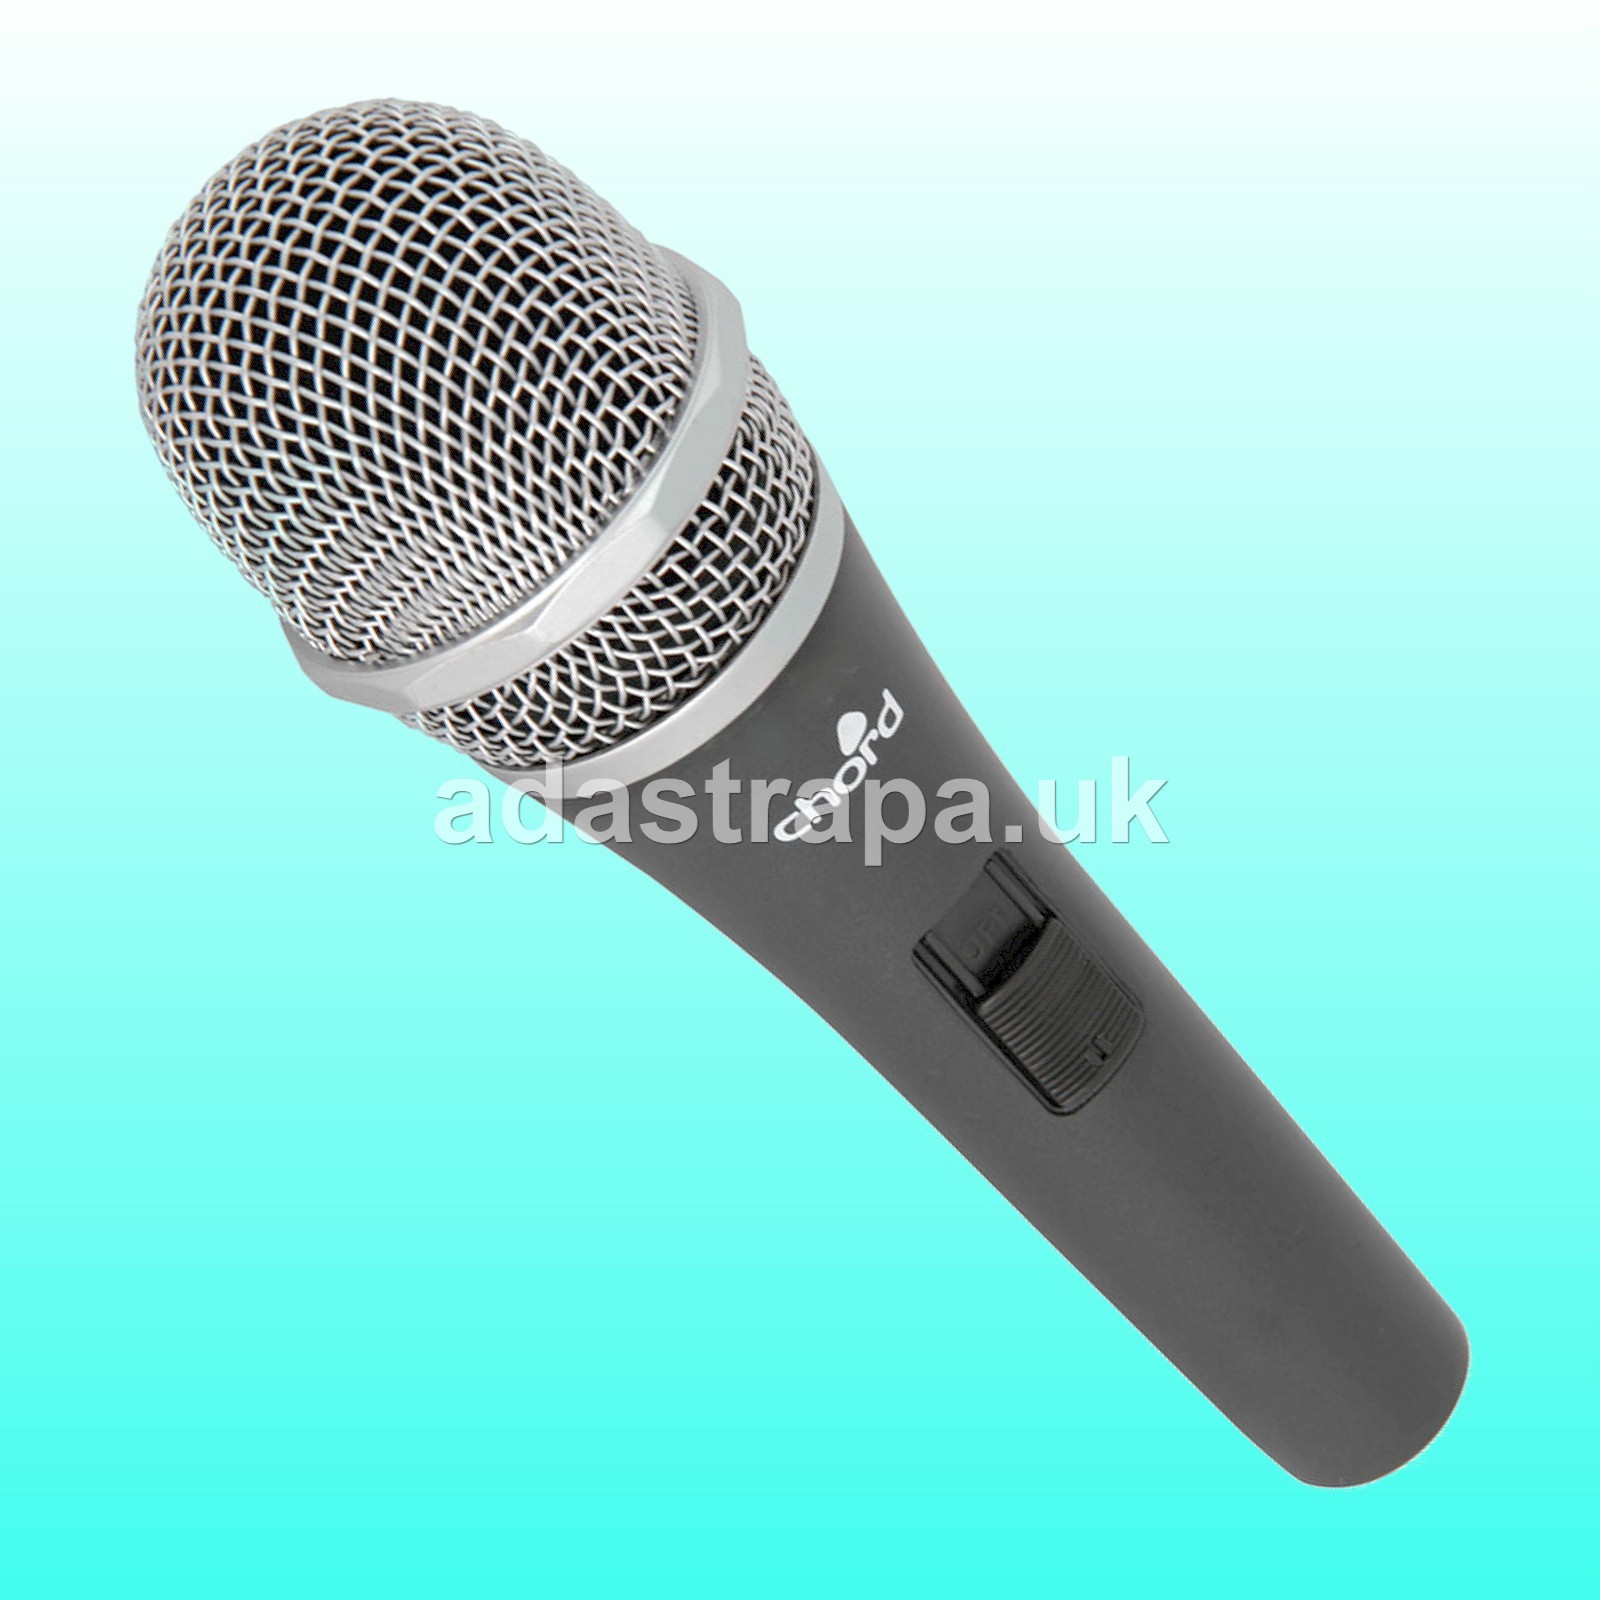 Chord DM04 Vocal Microphone  - 173.855UK